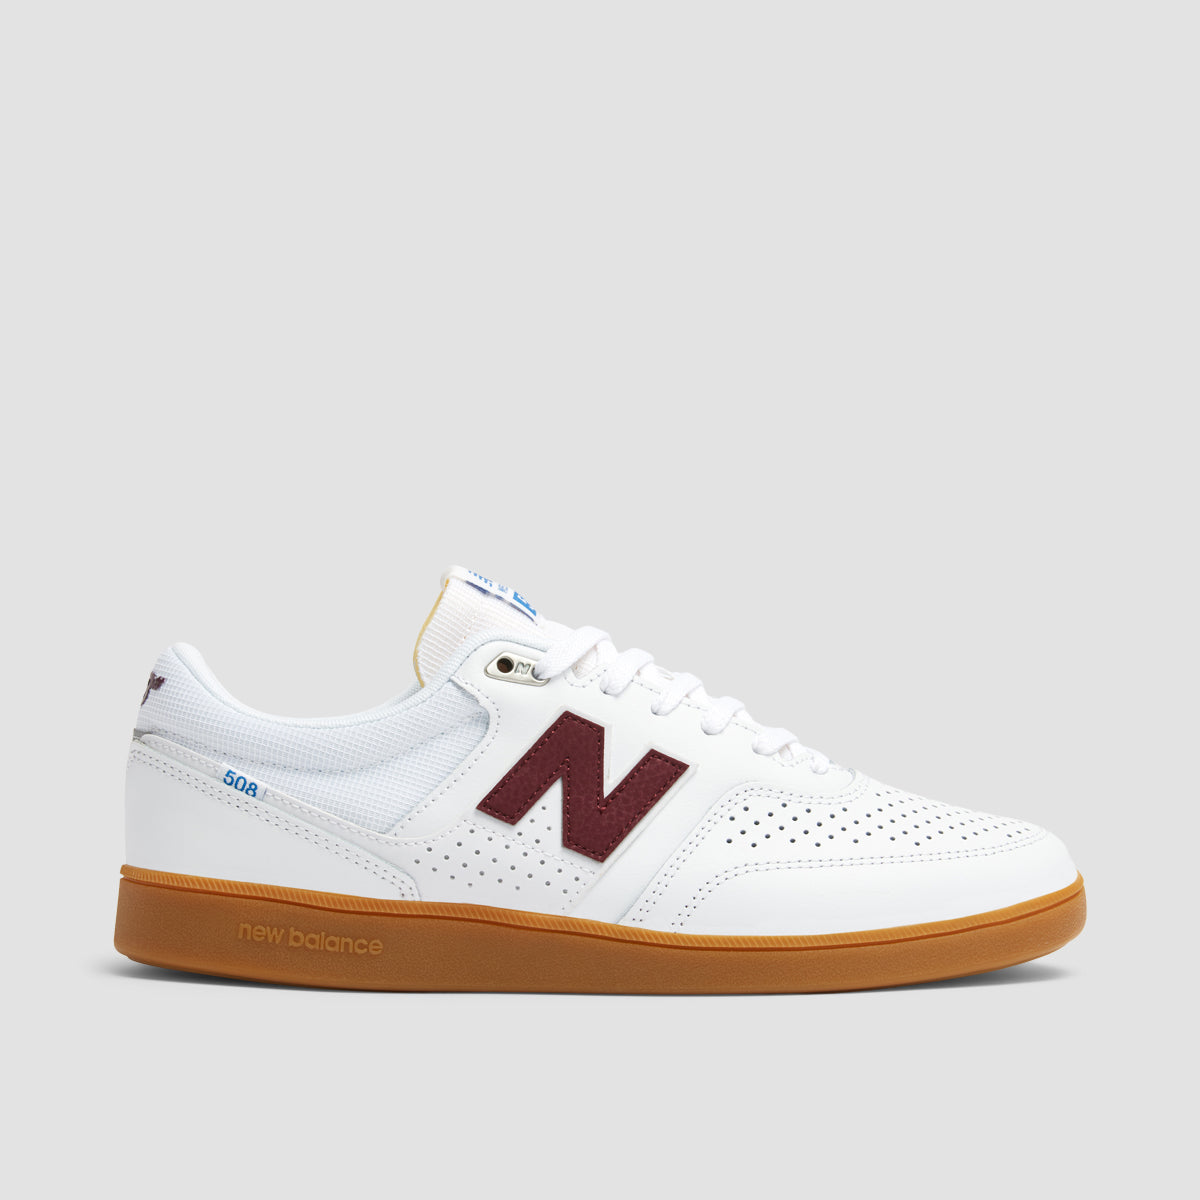 New Balance Numeric Brandon Westgate 508 Shoes - White/Nb Burgundy